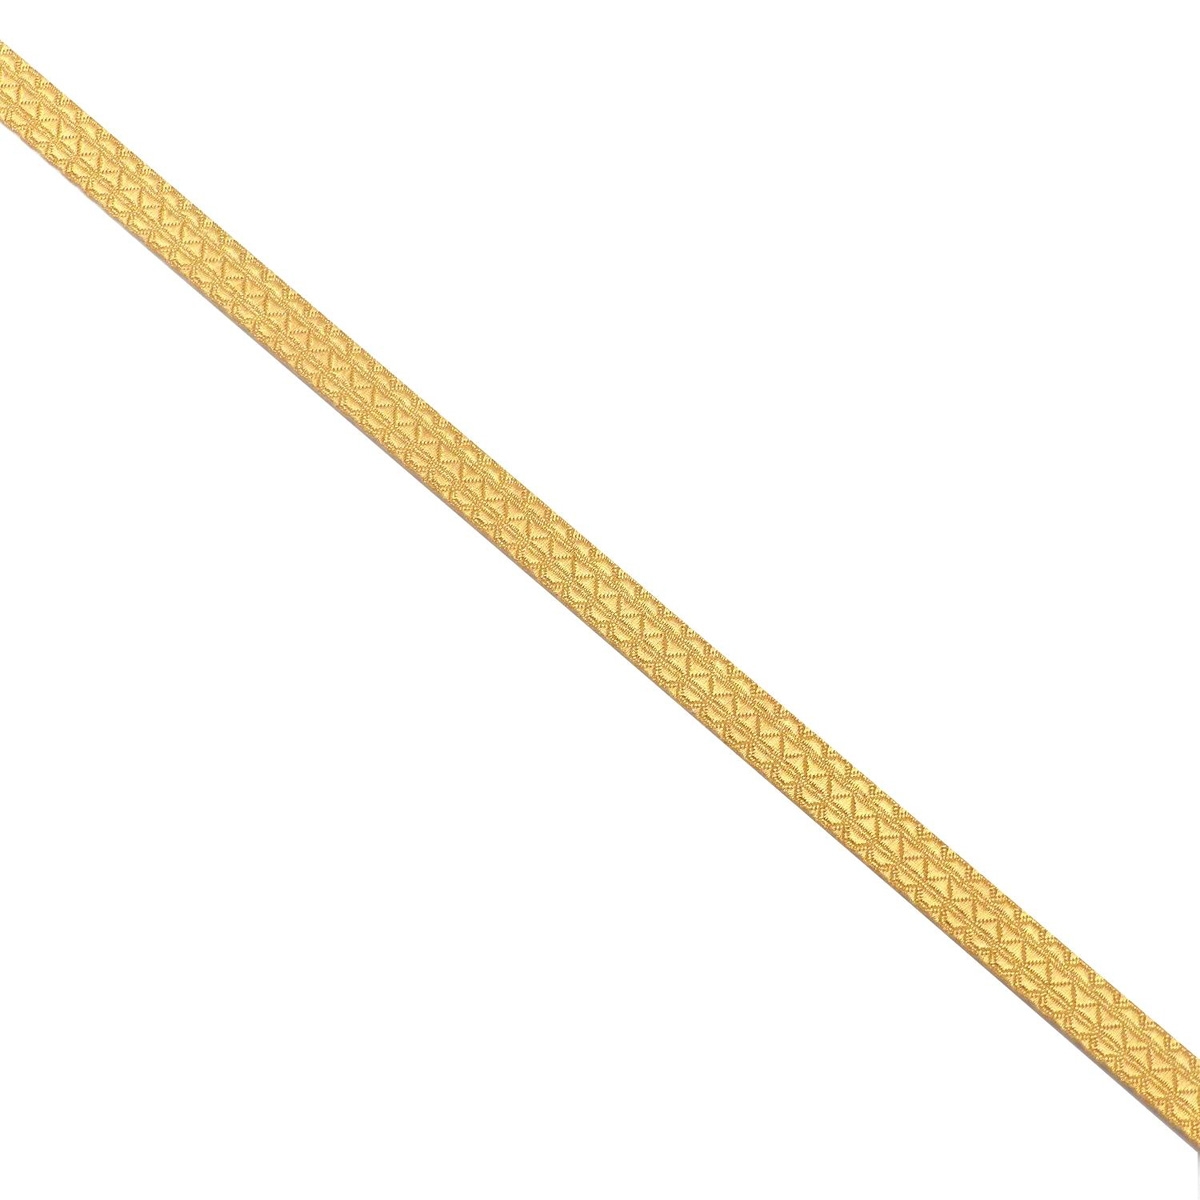 Masonic braid 13 mm large, price per meter customized good quality